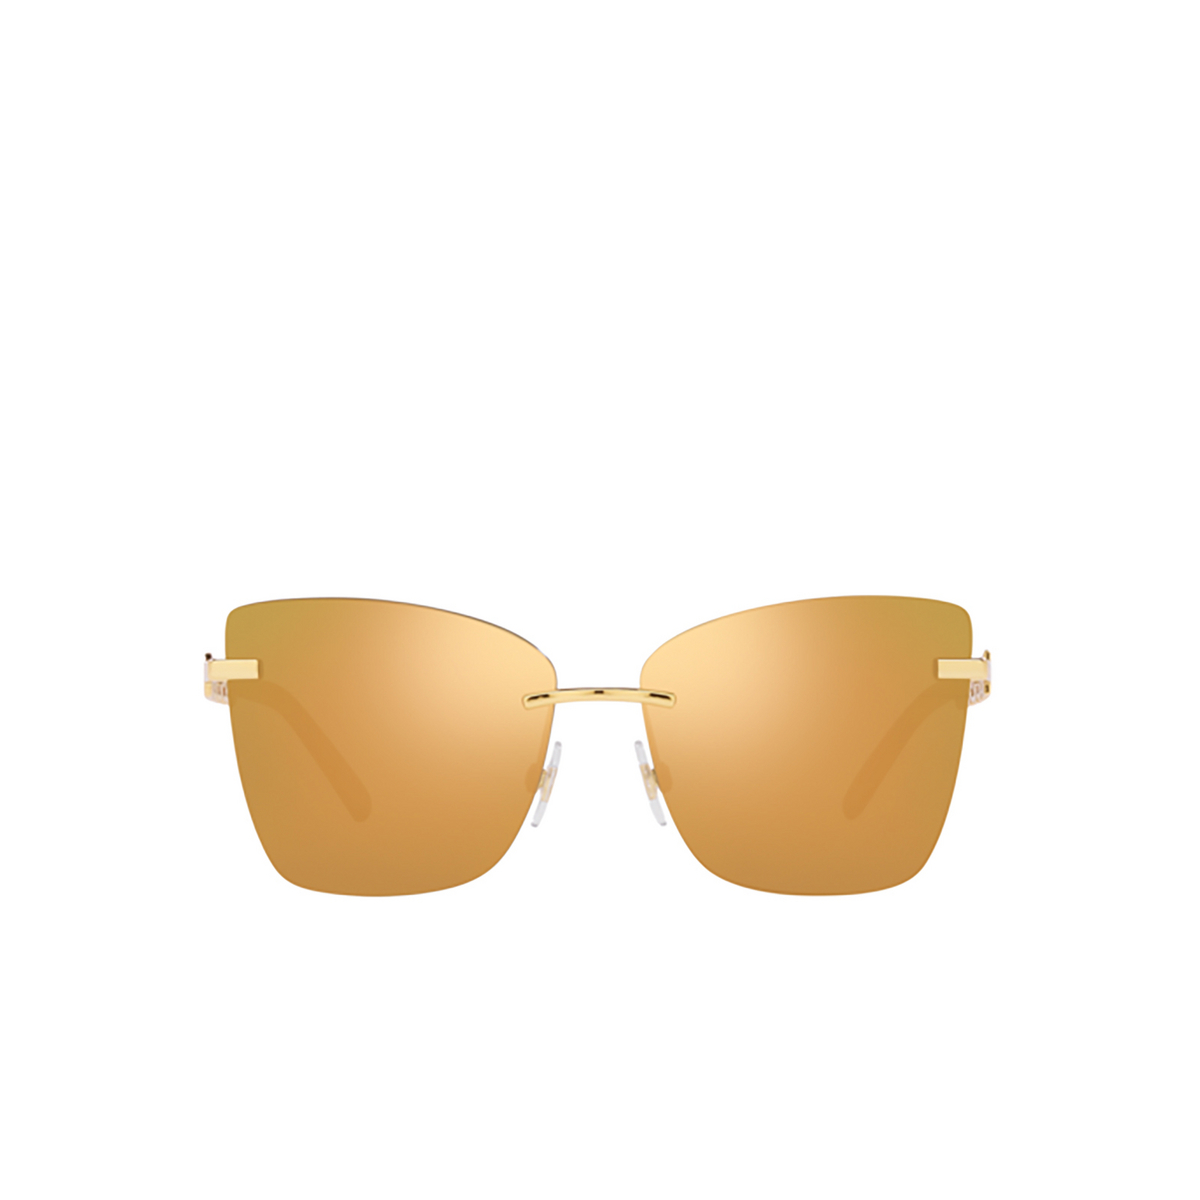 Dolce & Gabbana DG2289 Sunglasses 02/7P Gold - front view